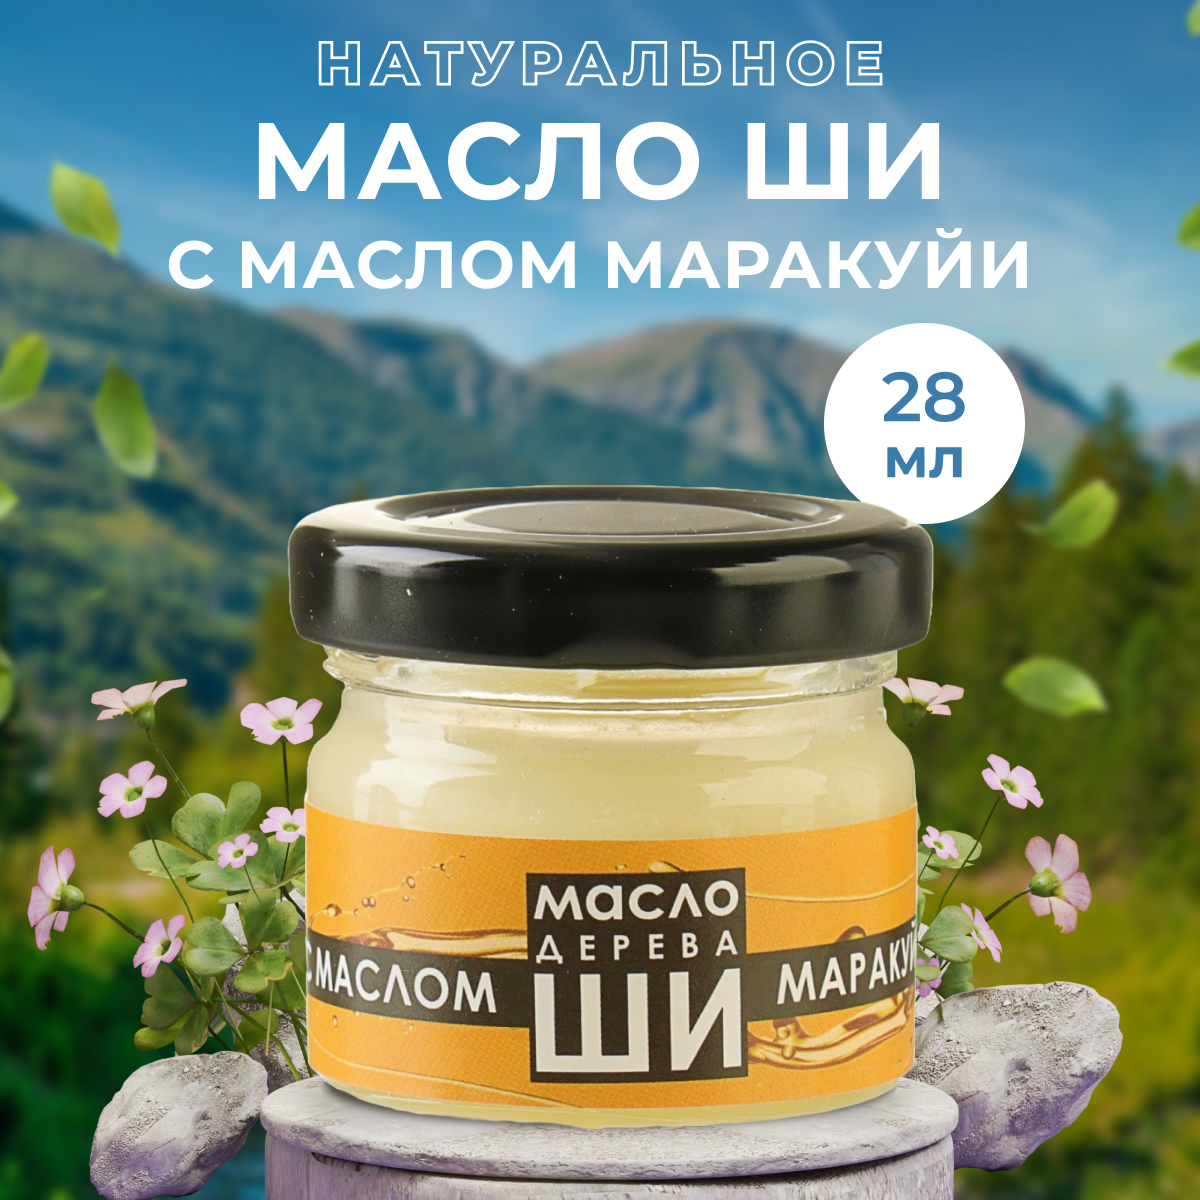 Масло ши Бизорюк с маслом маракуйи, Карите, стекло 28 мл.